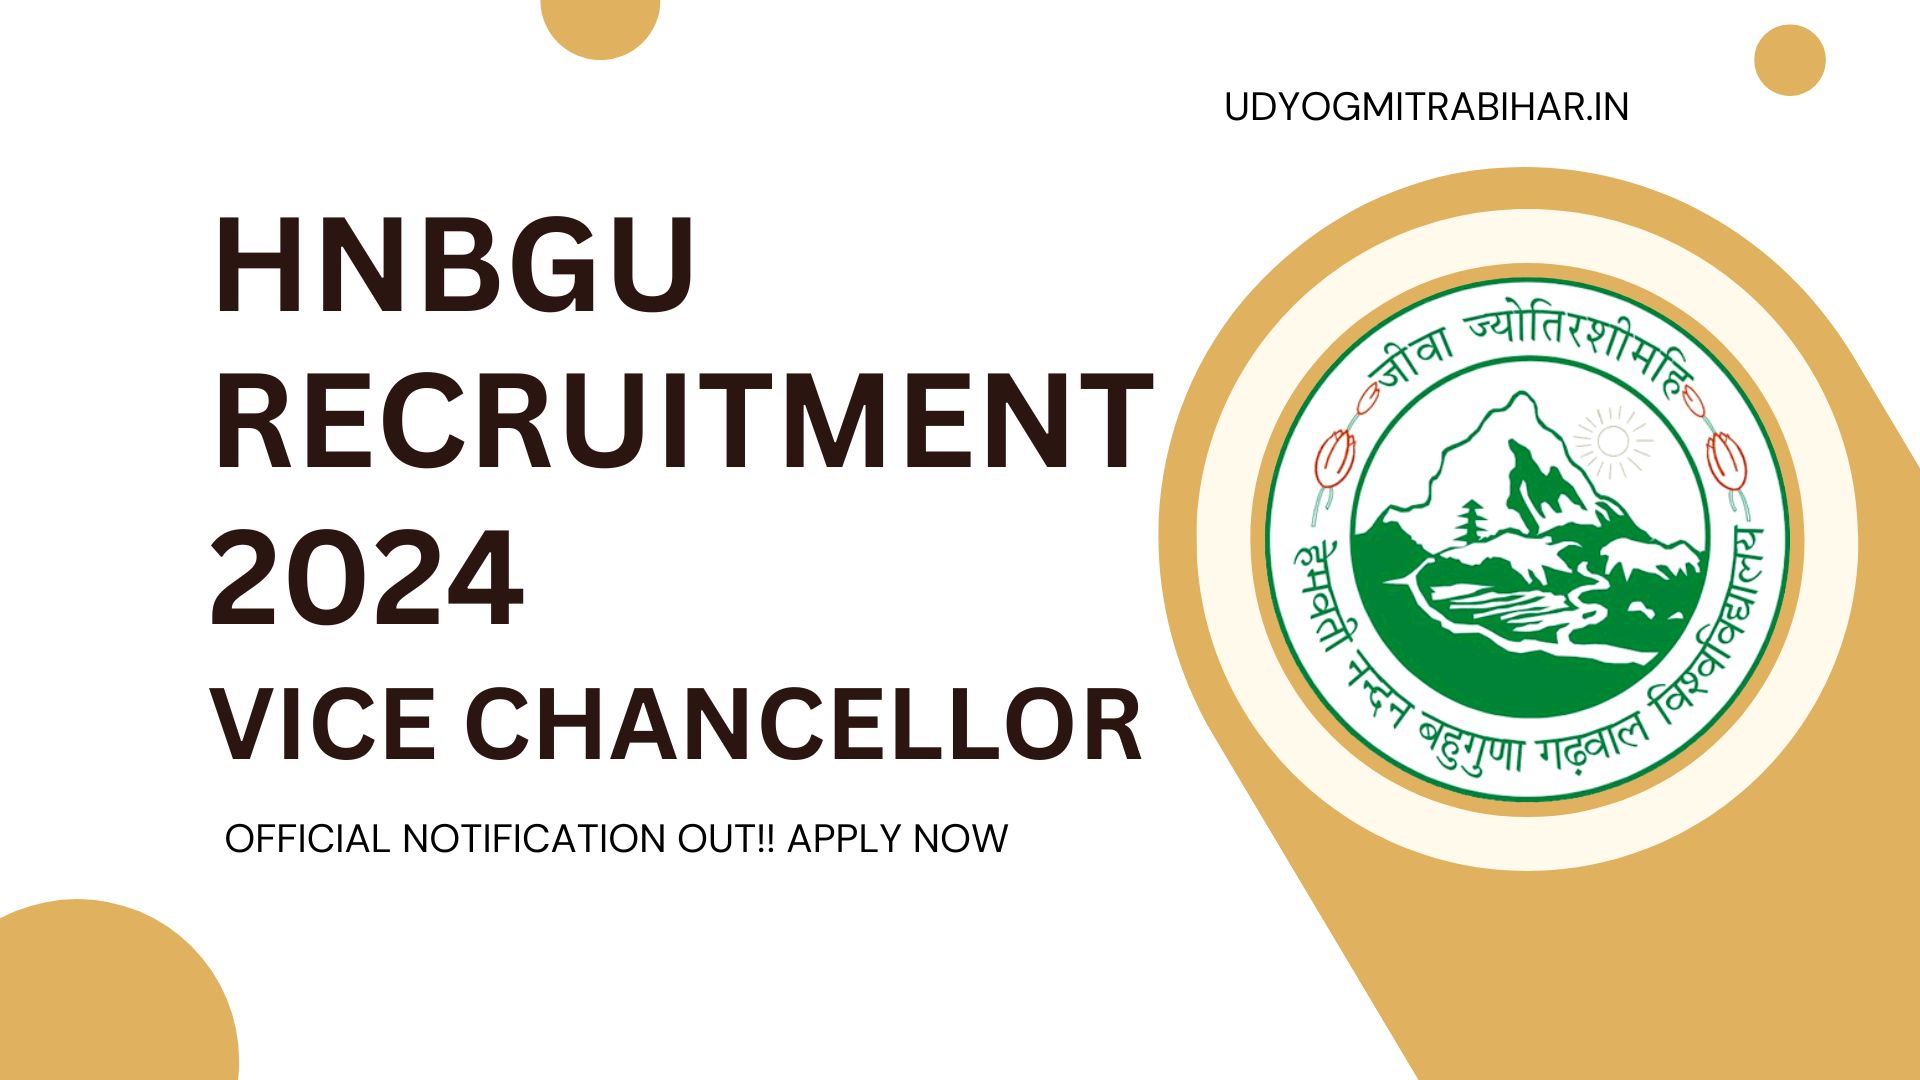 HNBGU Vice Chancellor Recruitment 2024, Official Notification, Application Process, Salary, Eligibility Criteria, Experience